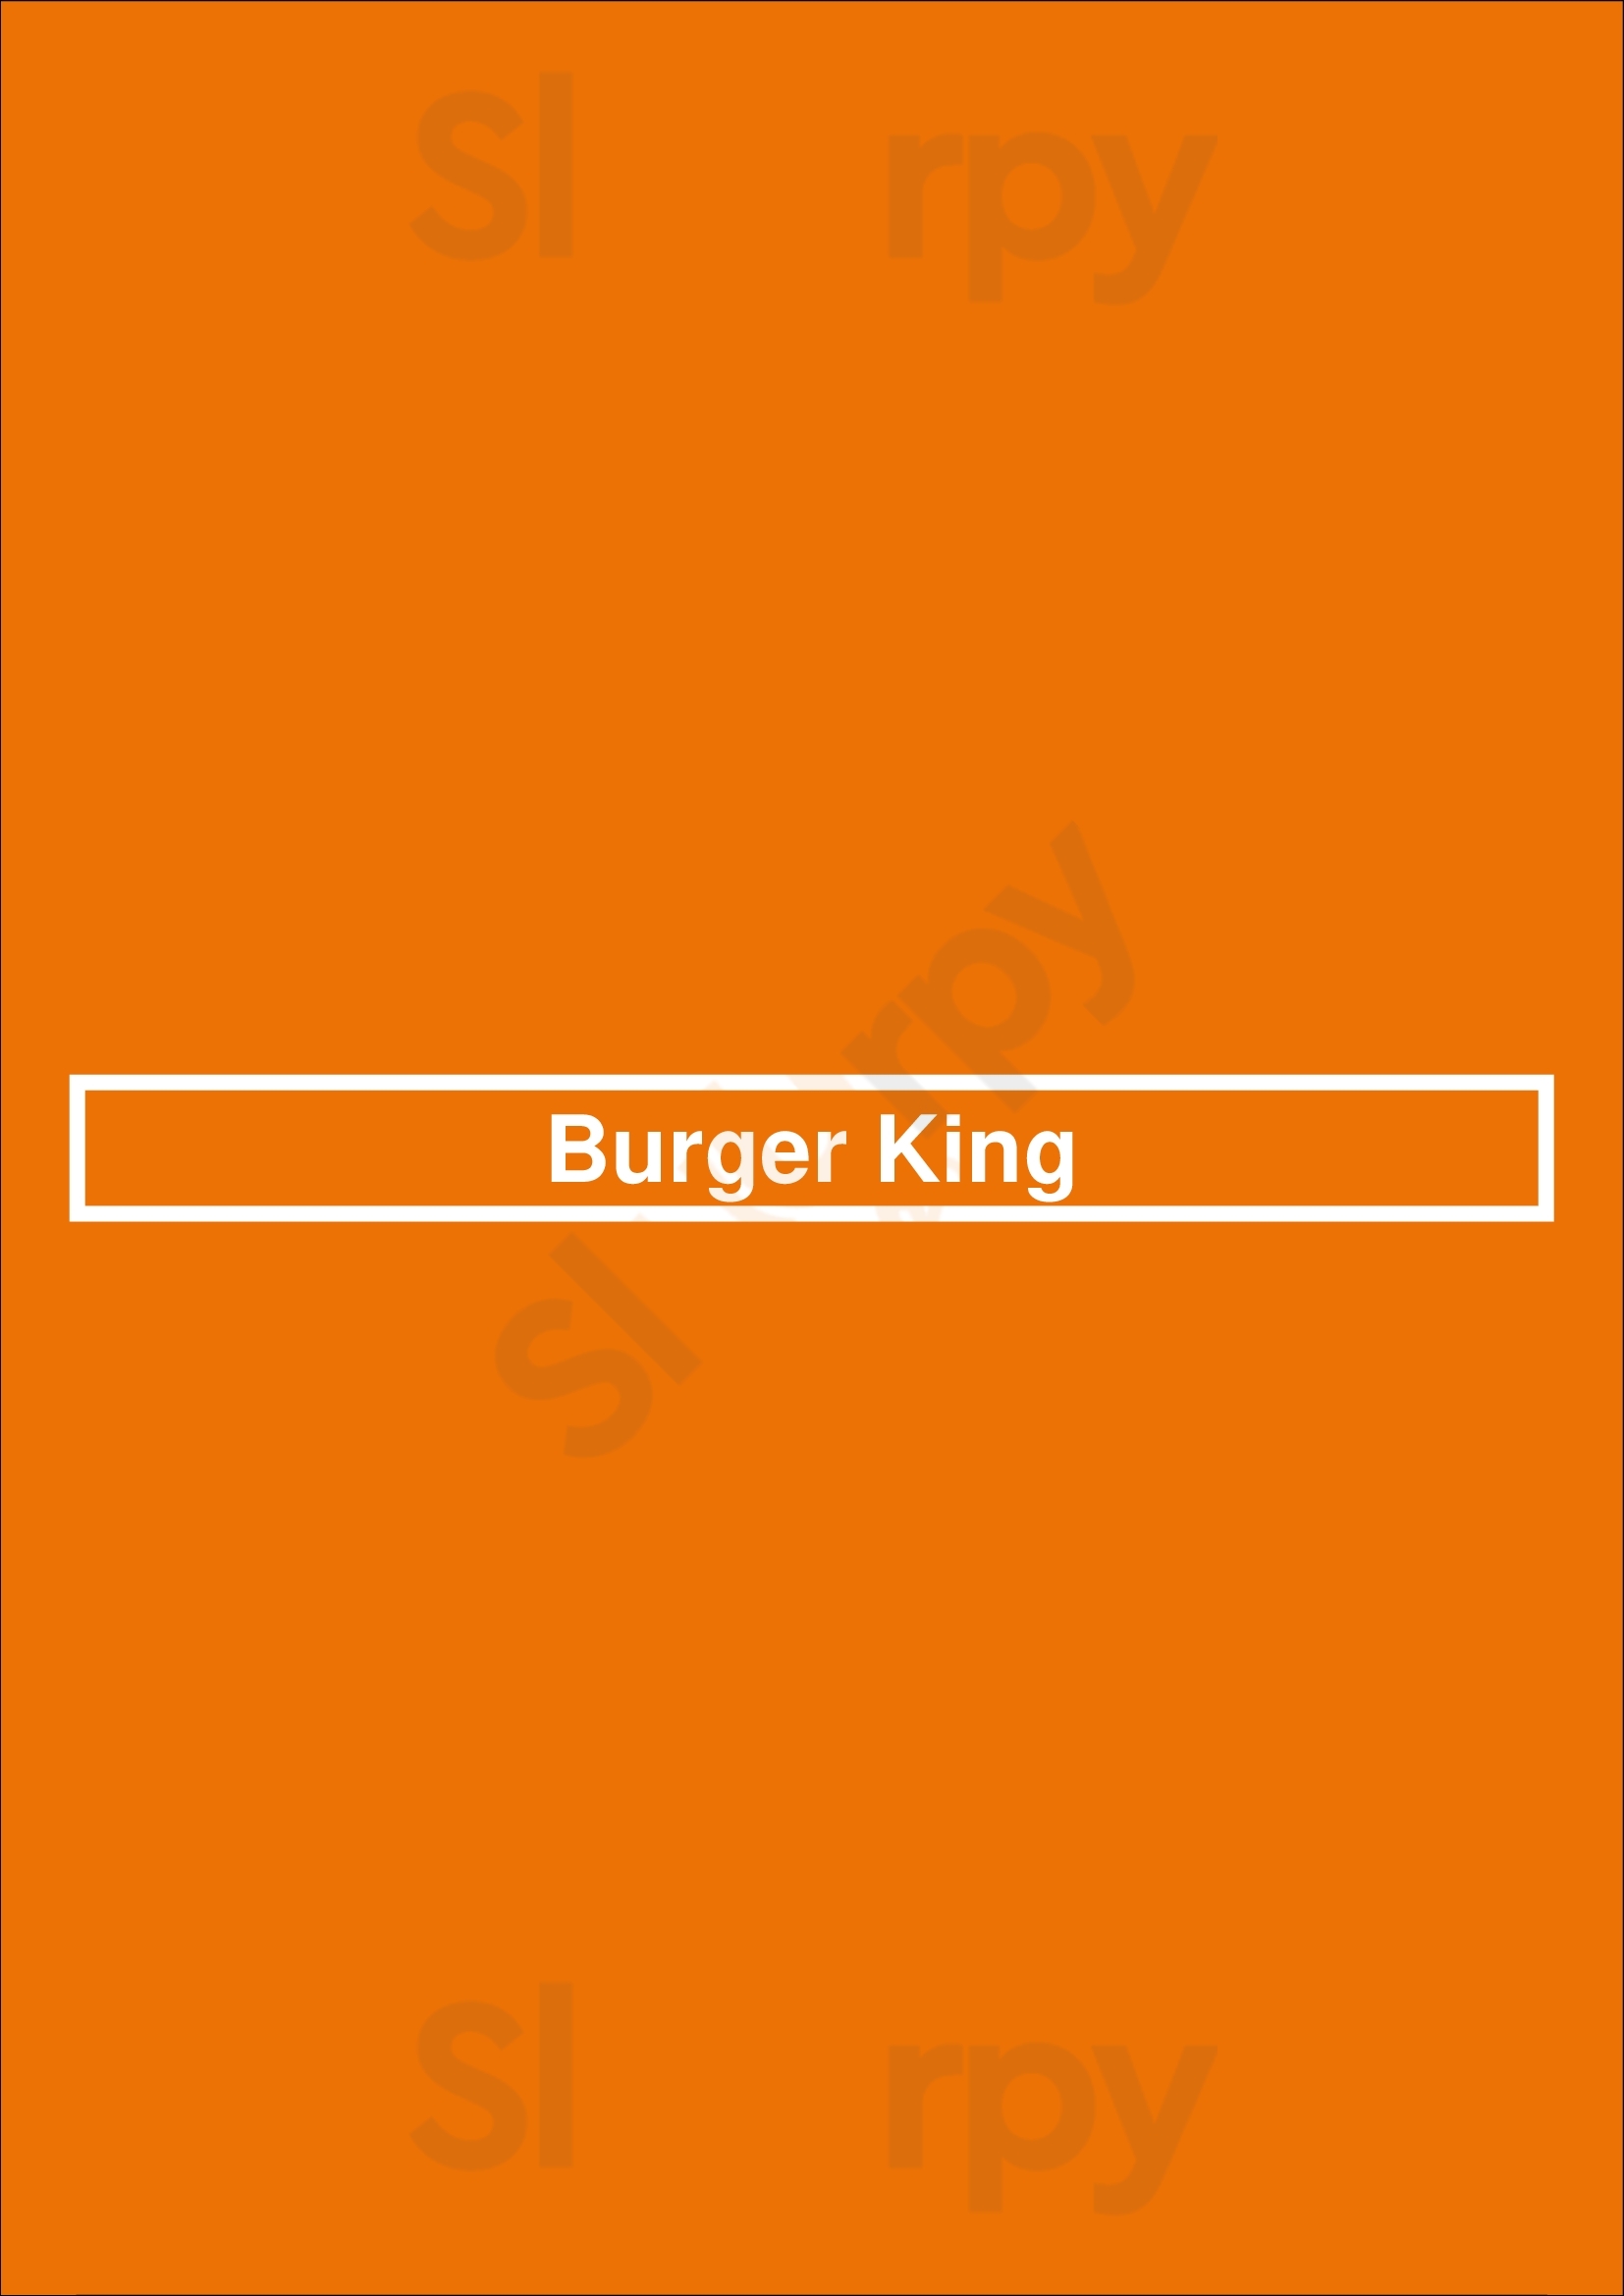 Burger King Sparks Menu - 1